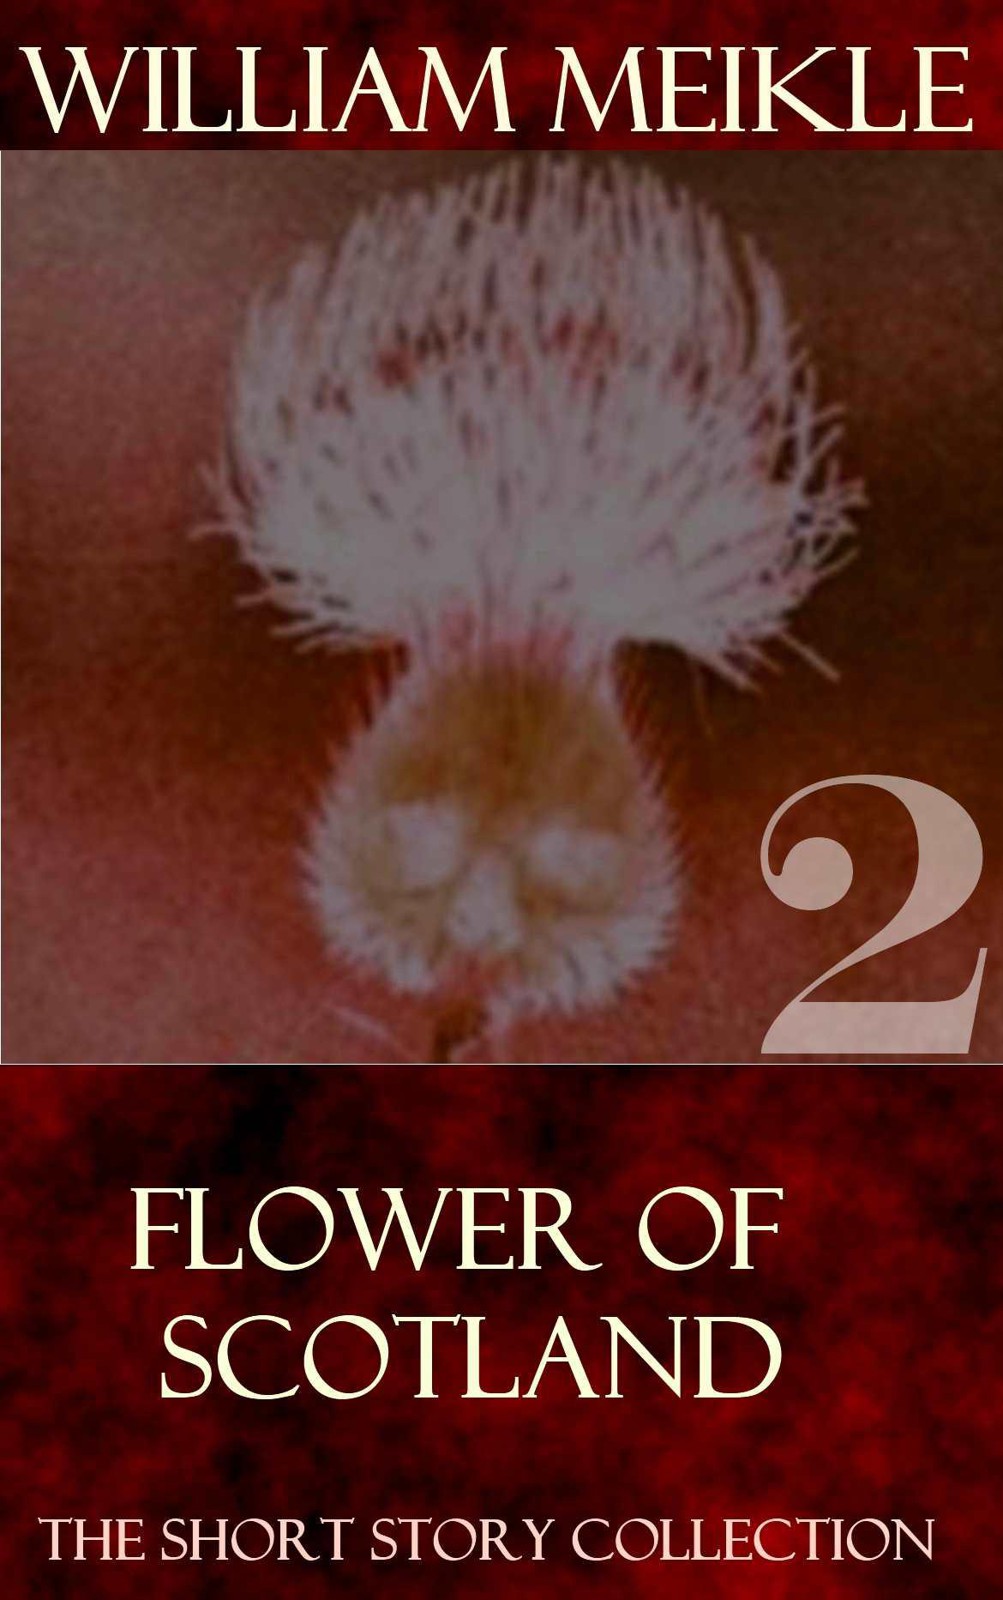 Flower of Scotland 2 by William Meikle